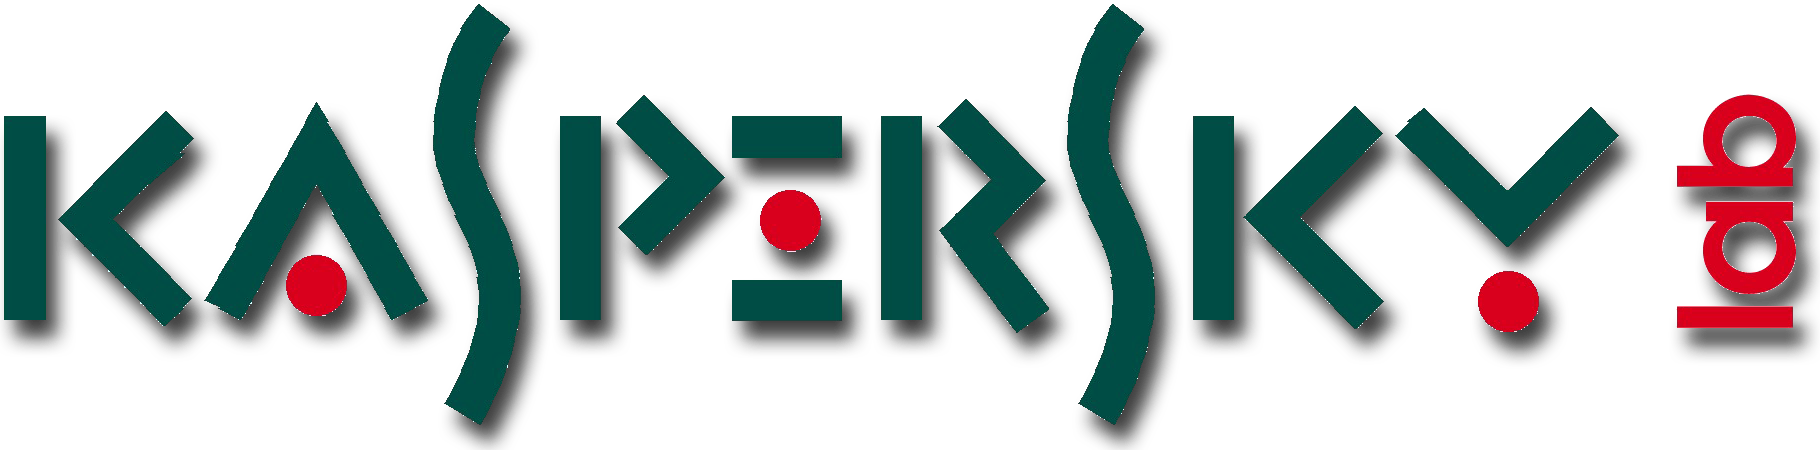 Kaspersky Logo - Kaspersky Logos